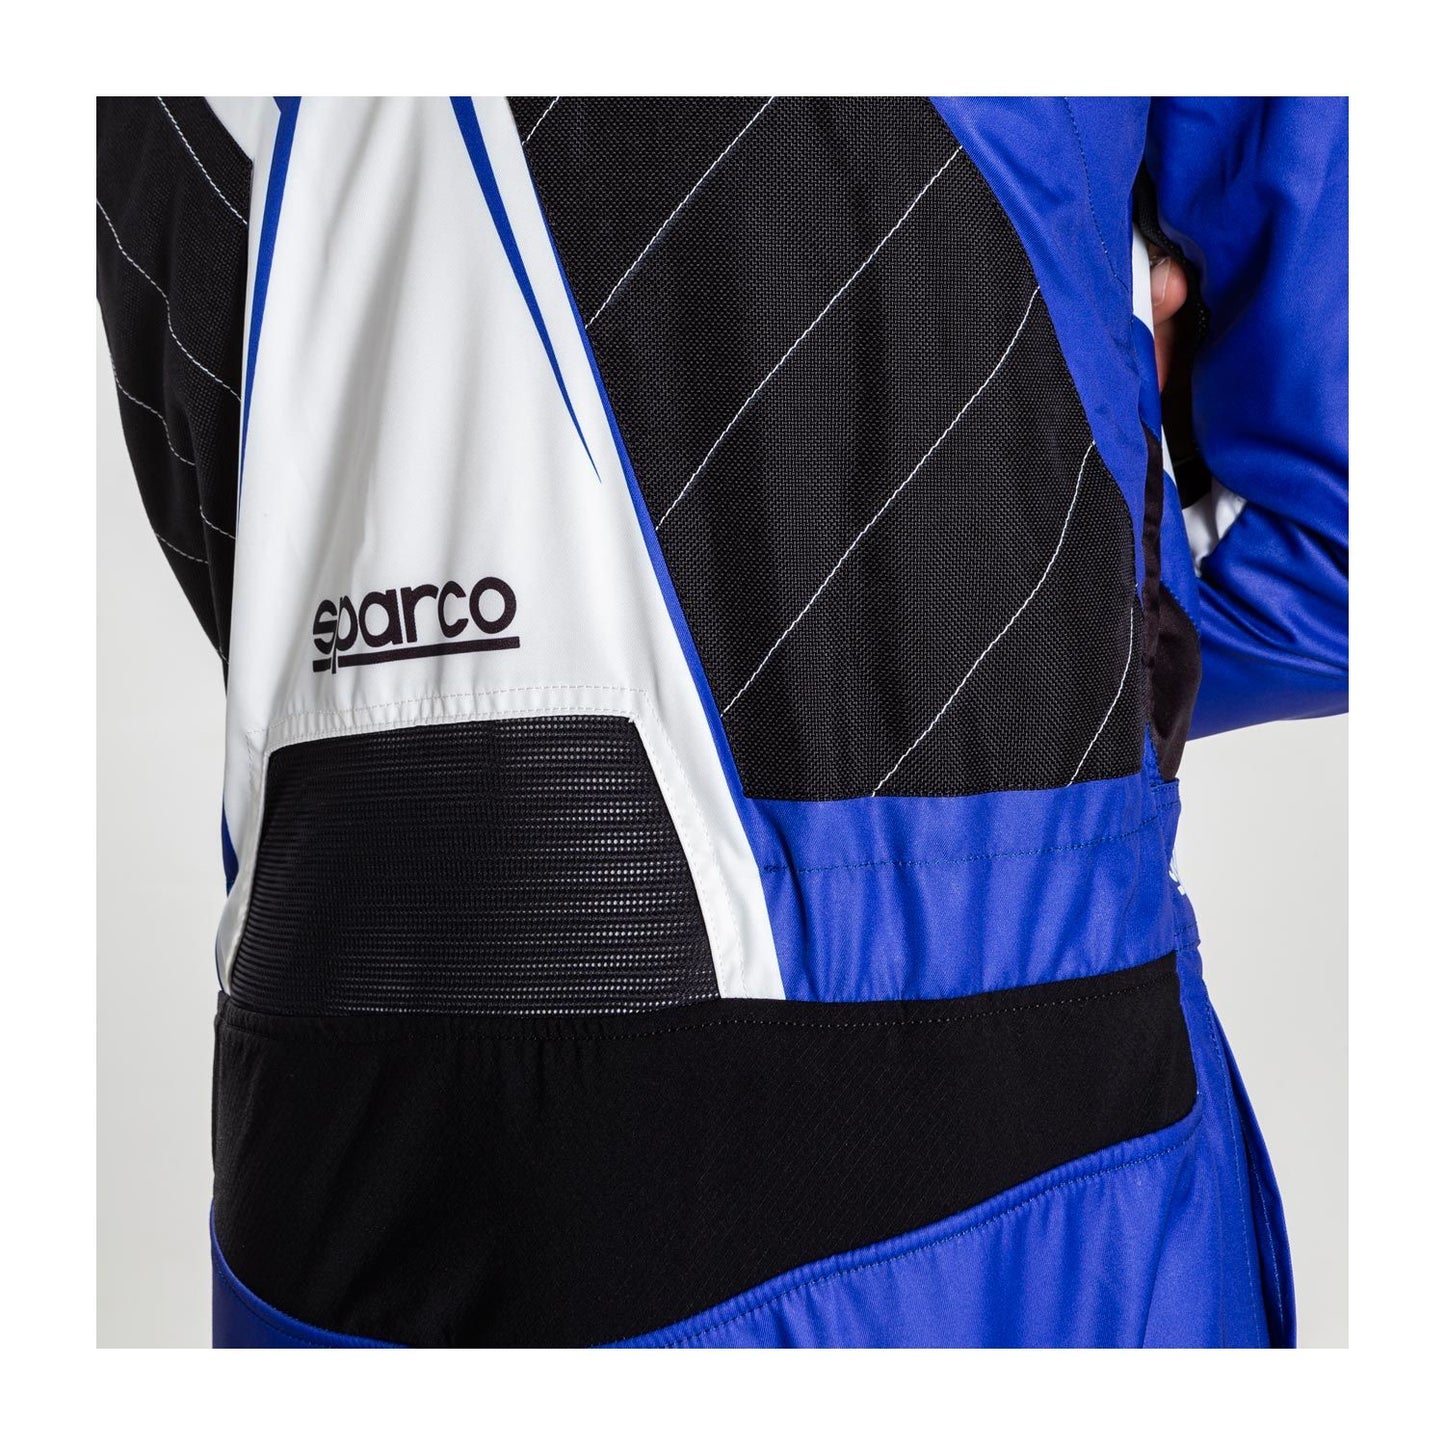 Sparco PRIME K MY20 Karting Suit black/blue (with homologation CIK-FIA)